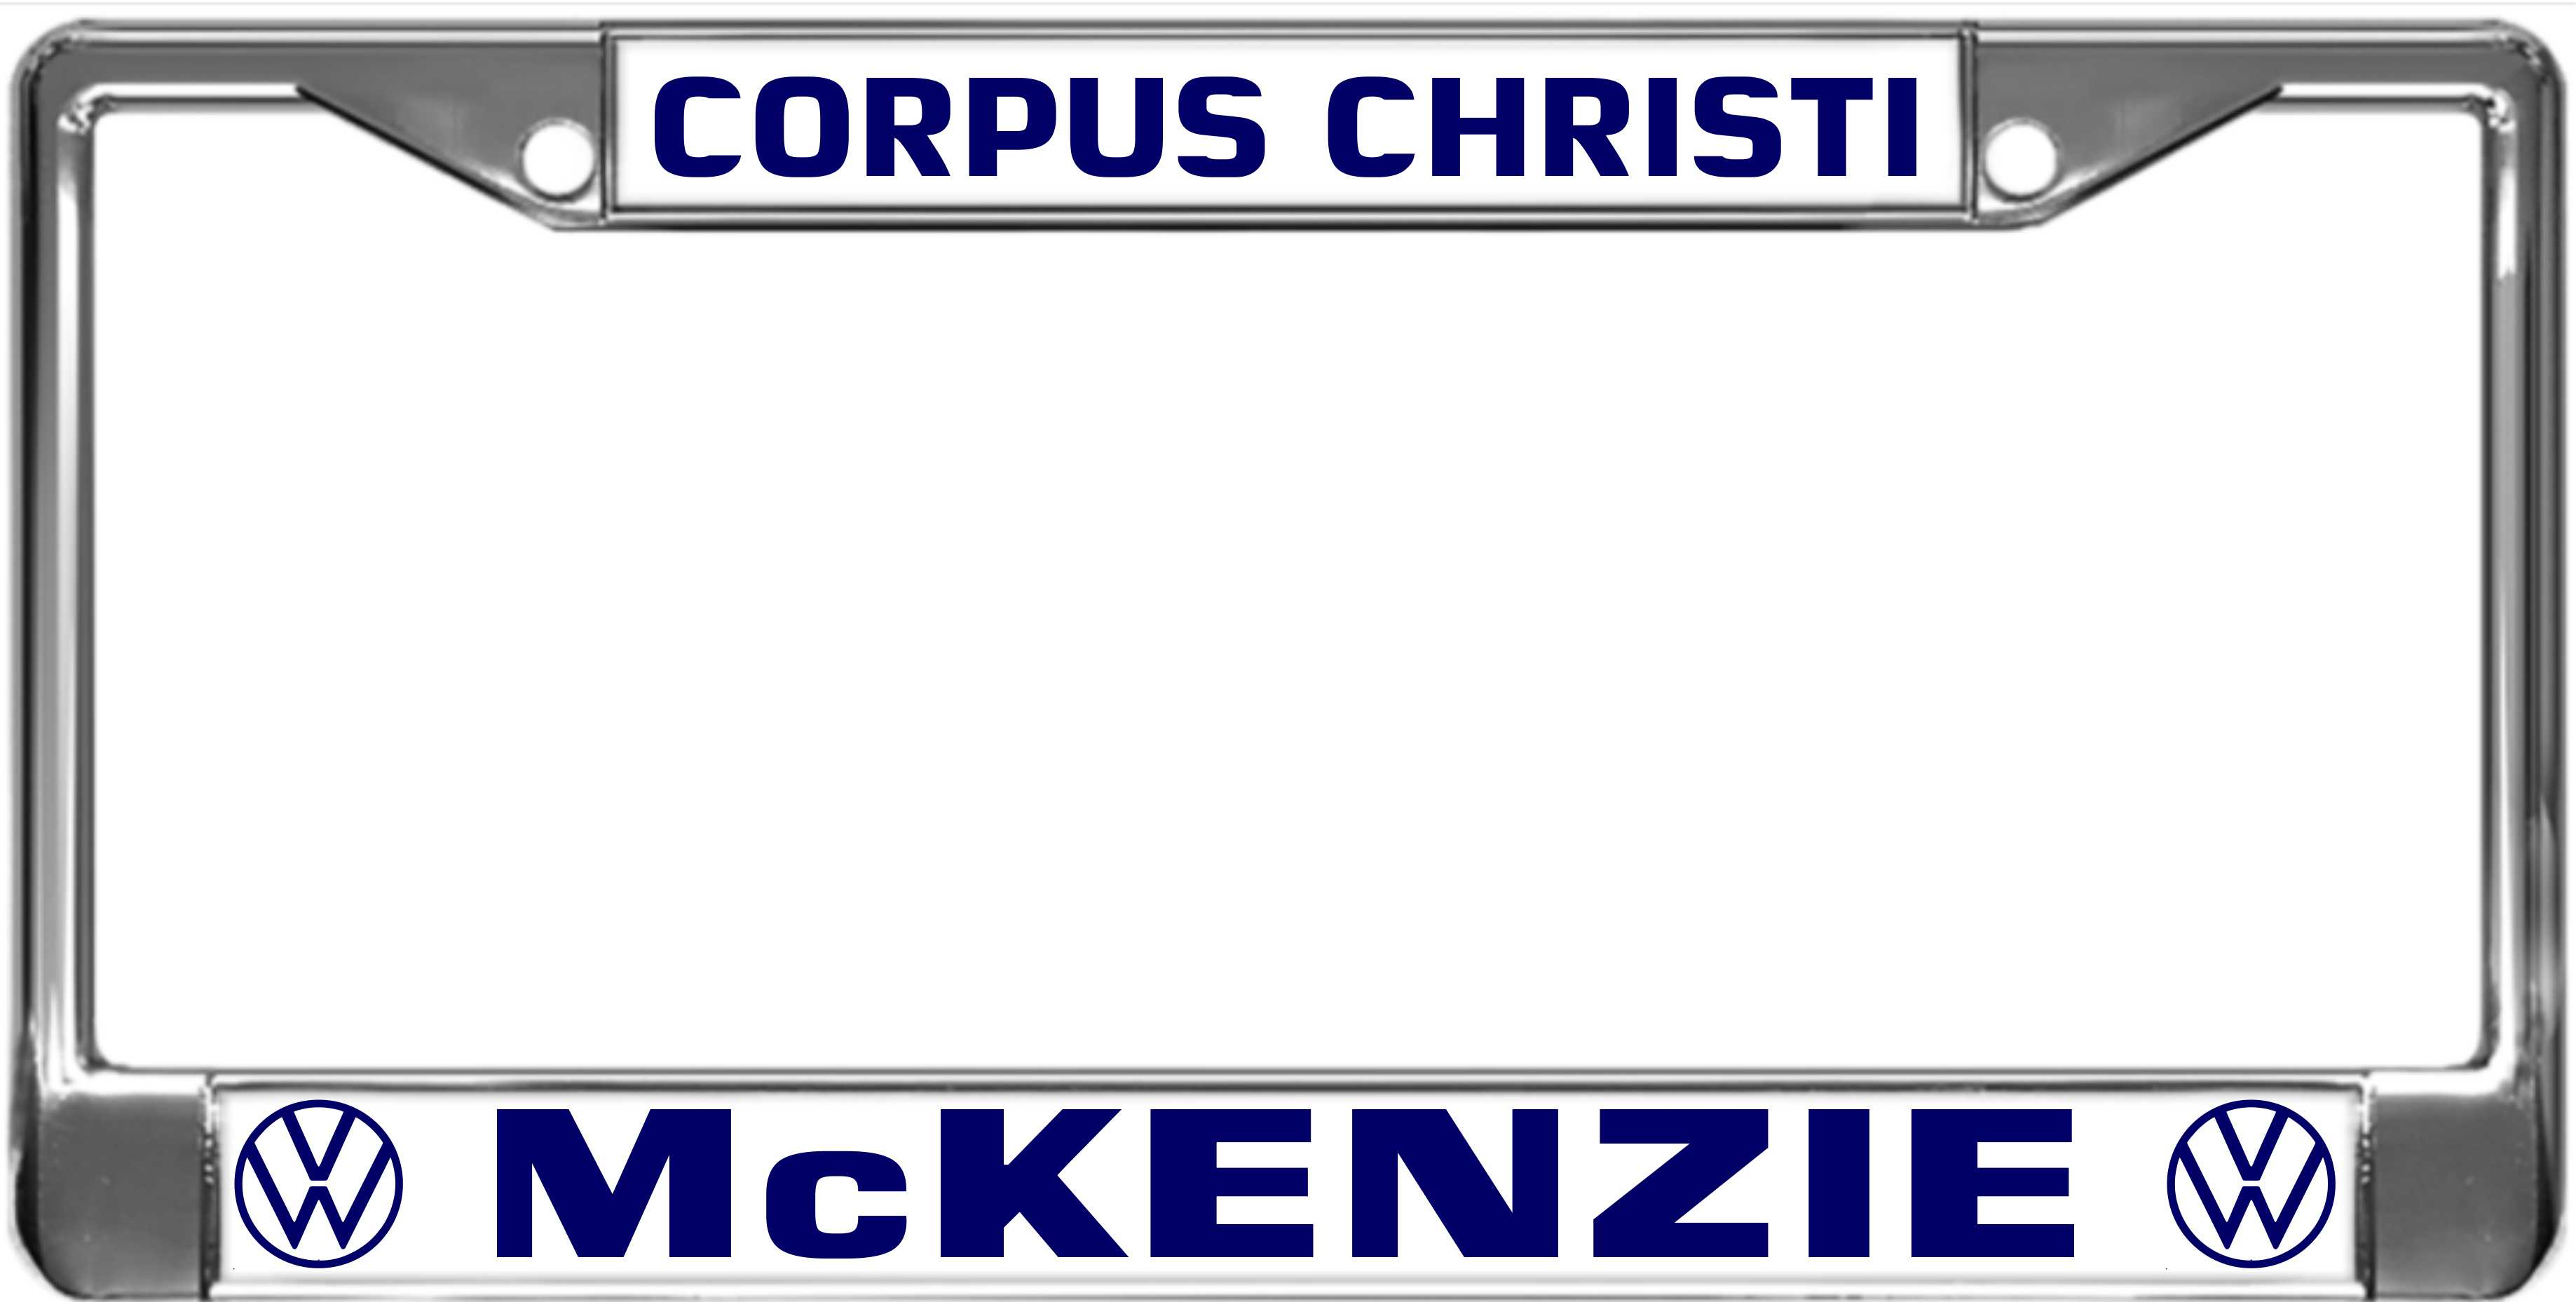 Corpus Christi - custom metal license plate frame